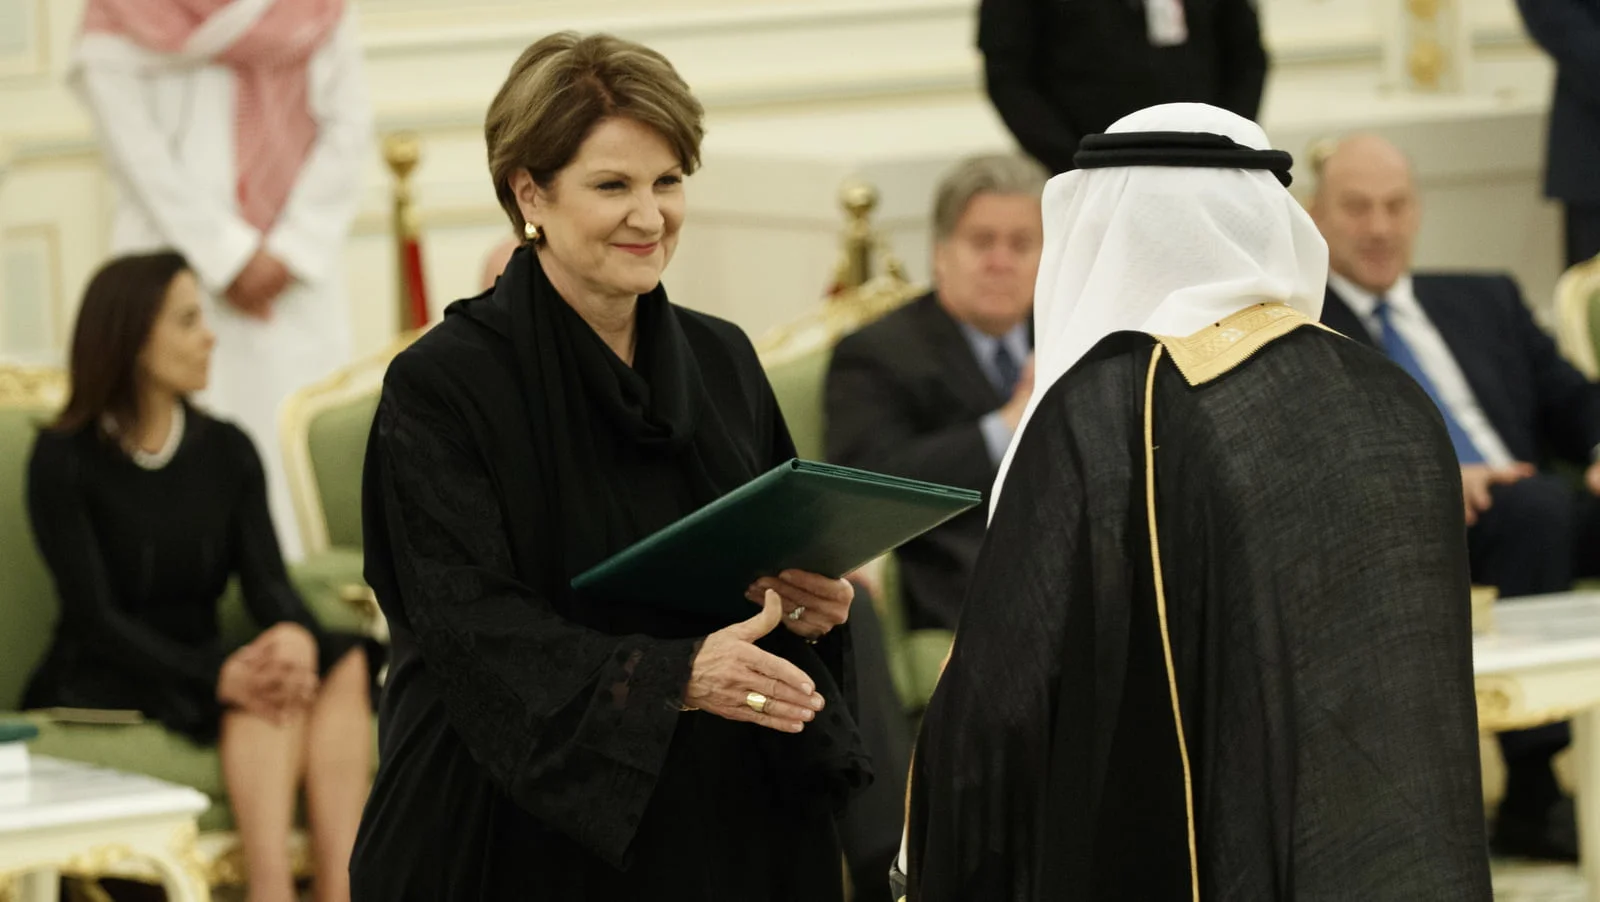 Lockheed Martin CEO Marillyn Hewson participates in a signing ceremony between President Trump and Saudi King Salam, May 20, 2017, in Riyadh. Evan Vucci | AP